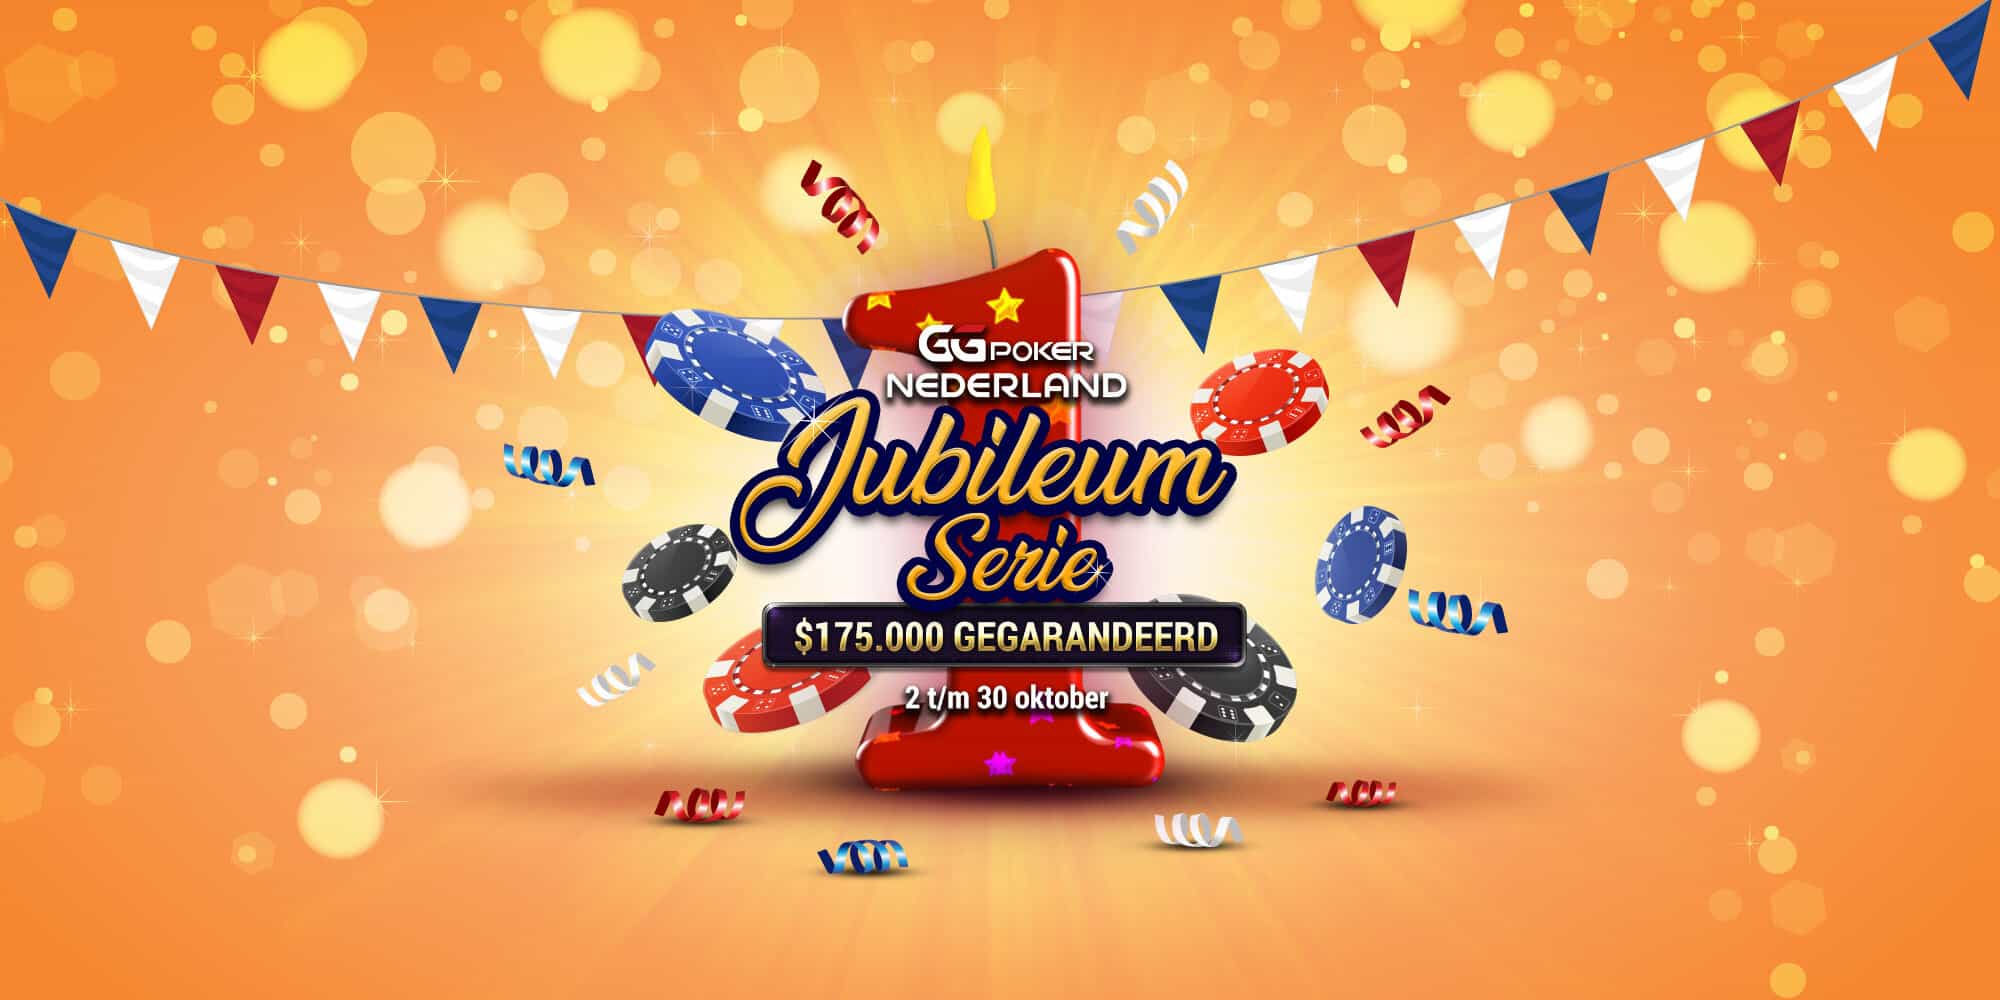 GGPoker Nederland Jubileum Serie van 3 t/m 30 oktober bij GGPoker